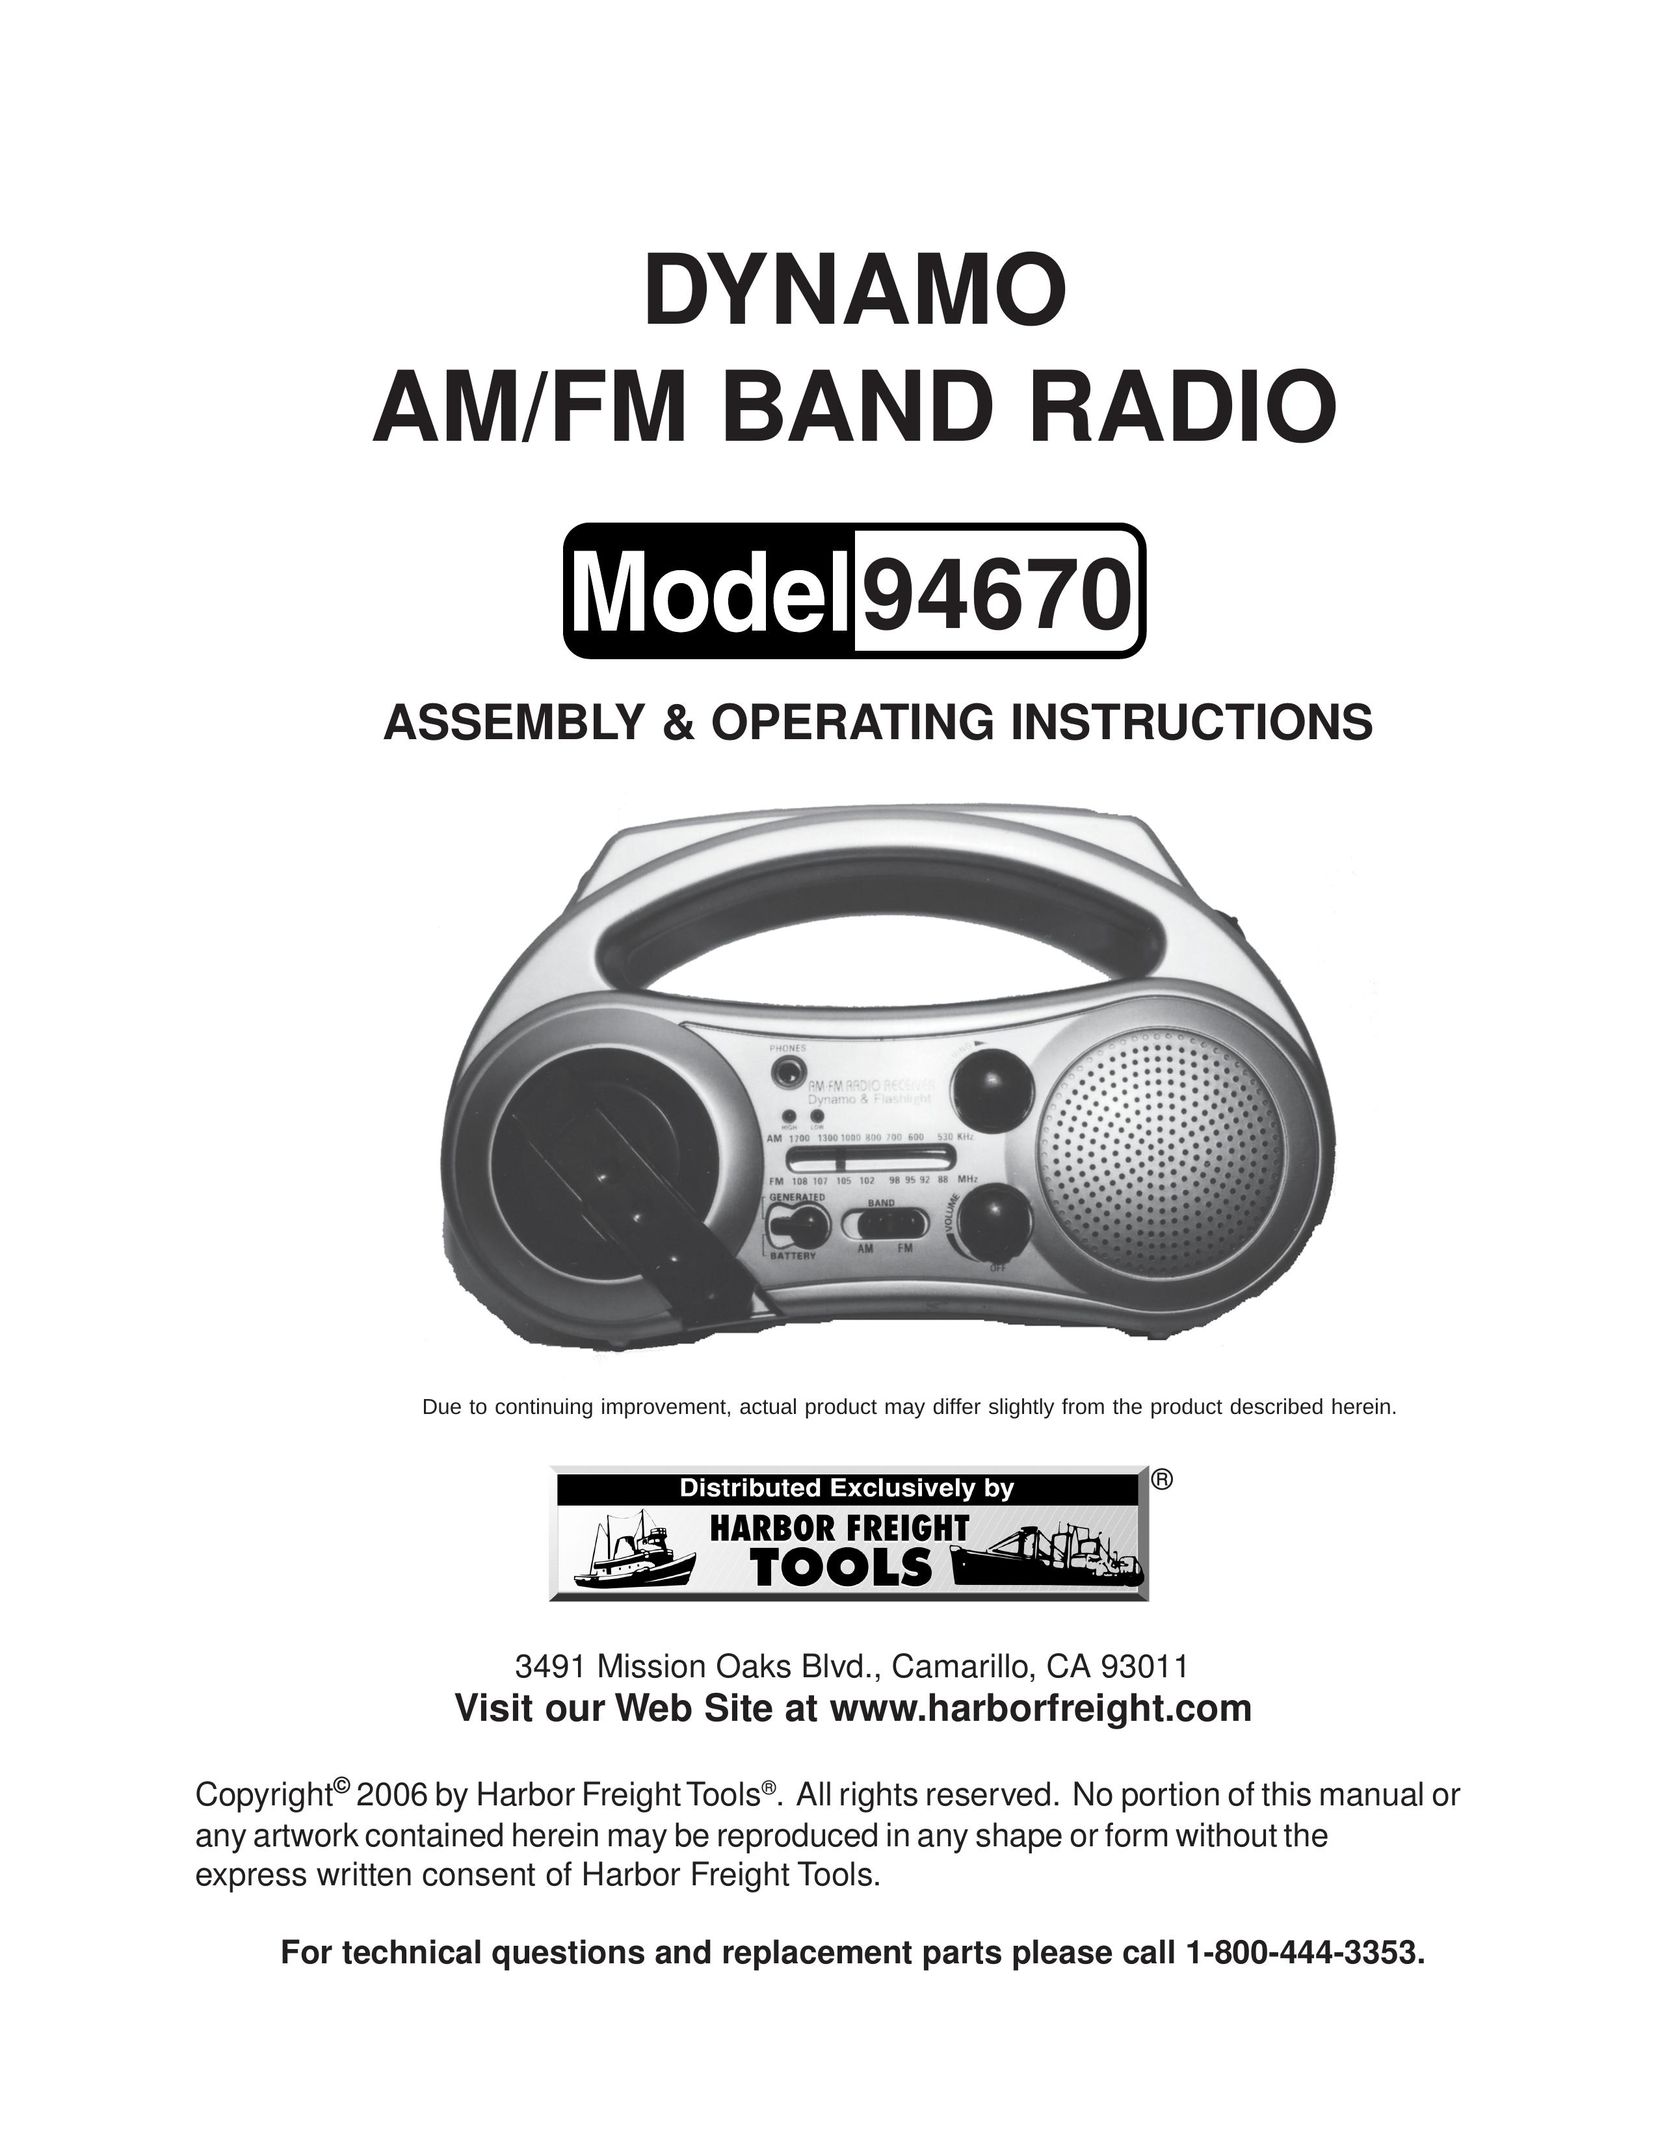 Harbor Freight Tools 94670 Radio User Manual